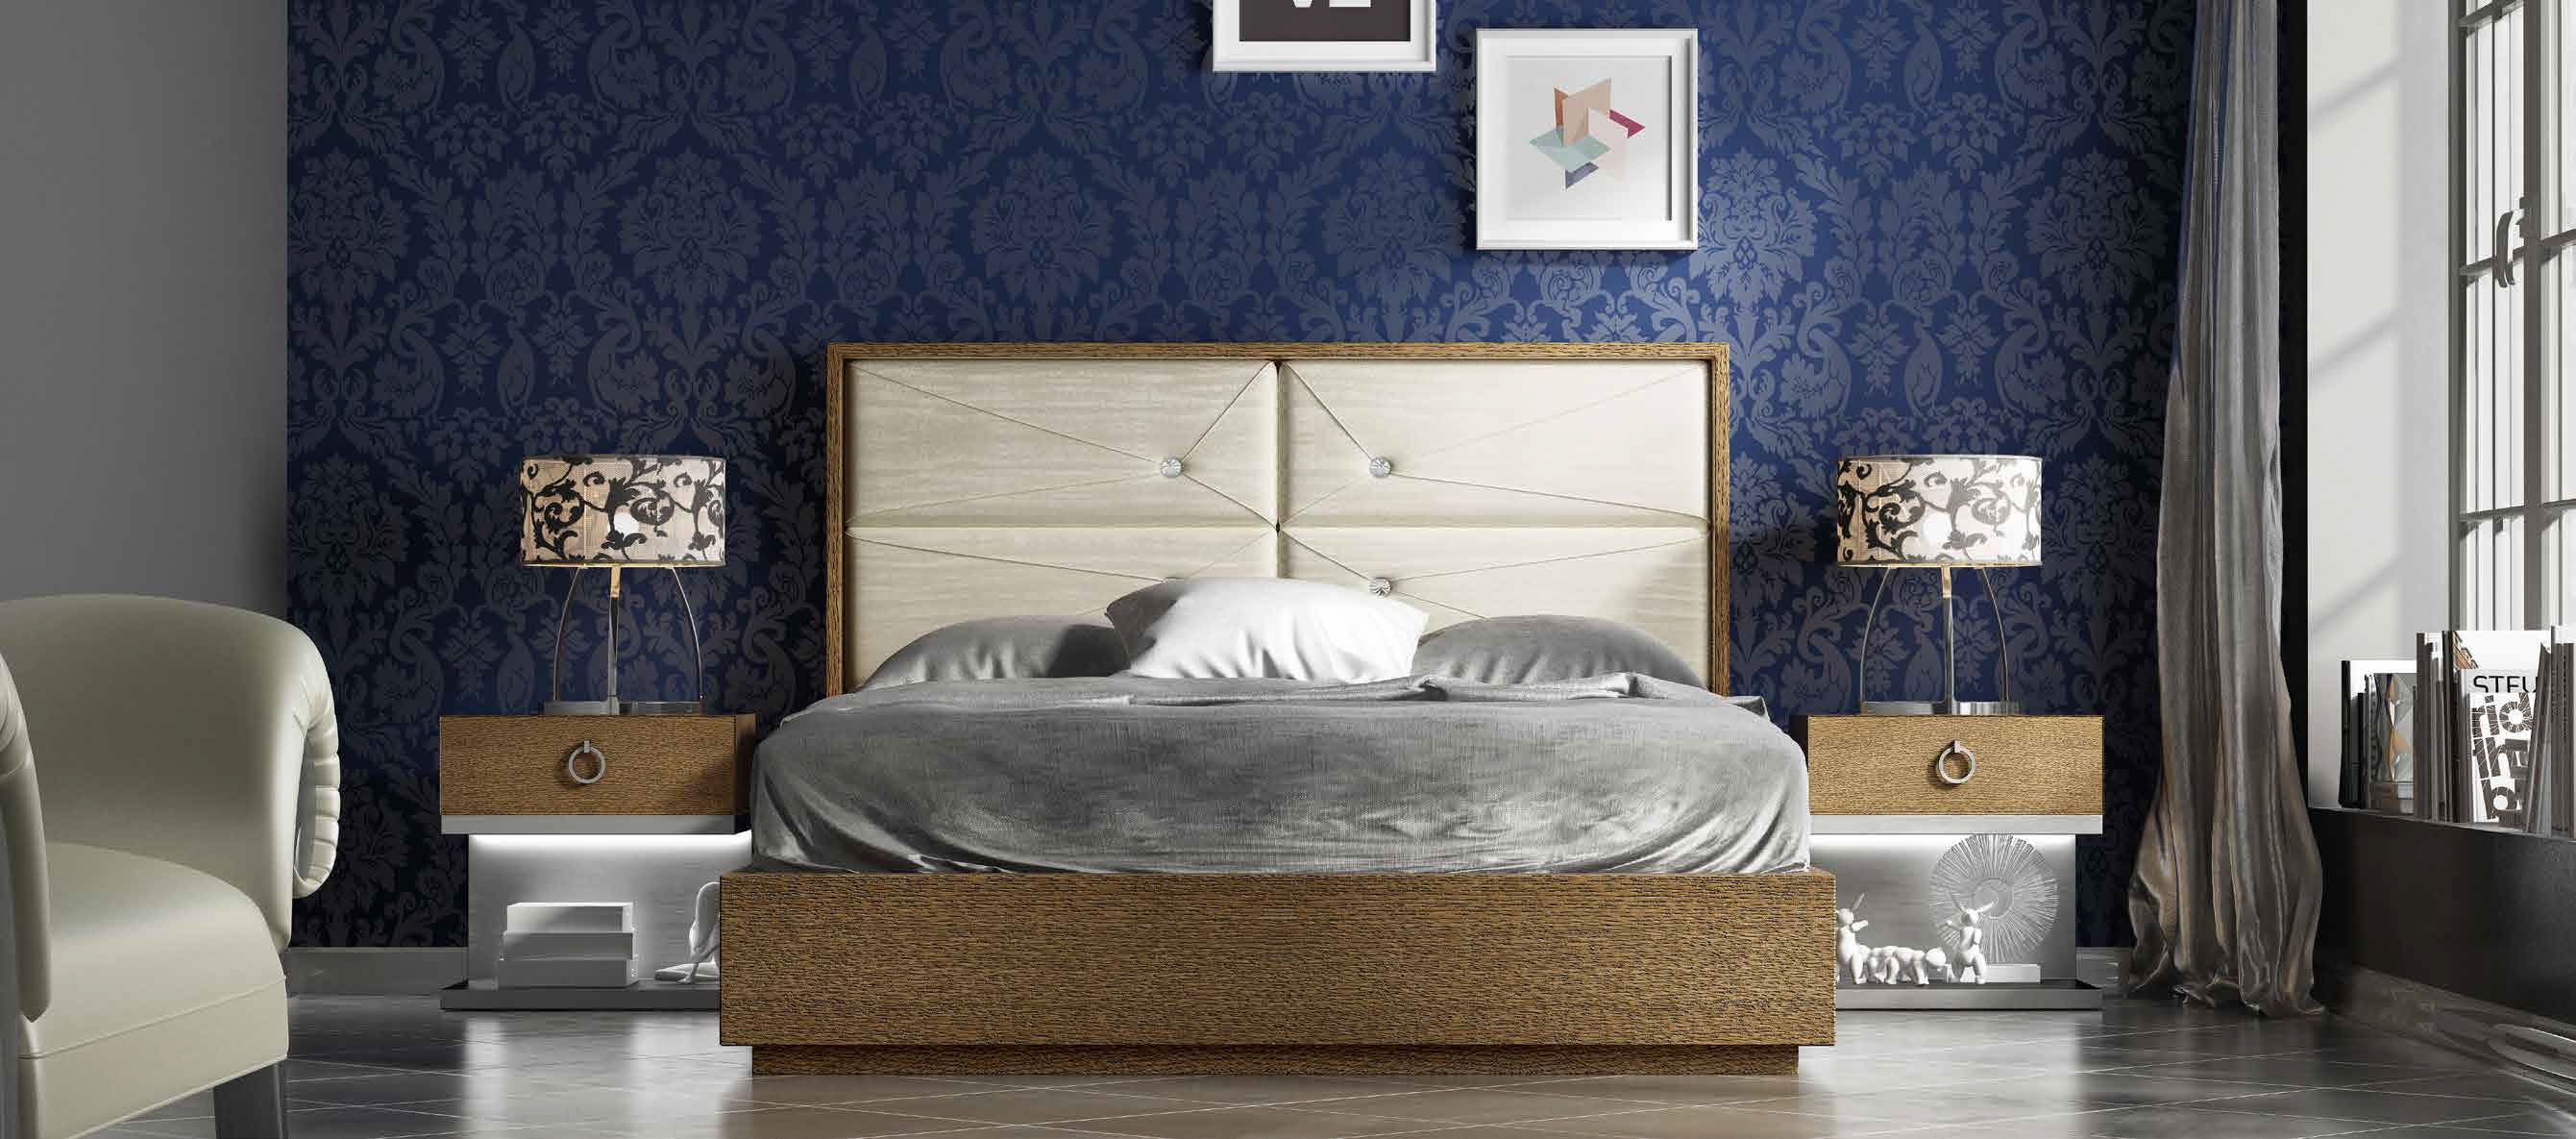 Brands Garcia Sabate, Modern Bedroom Spain DOR 39